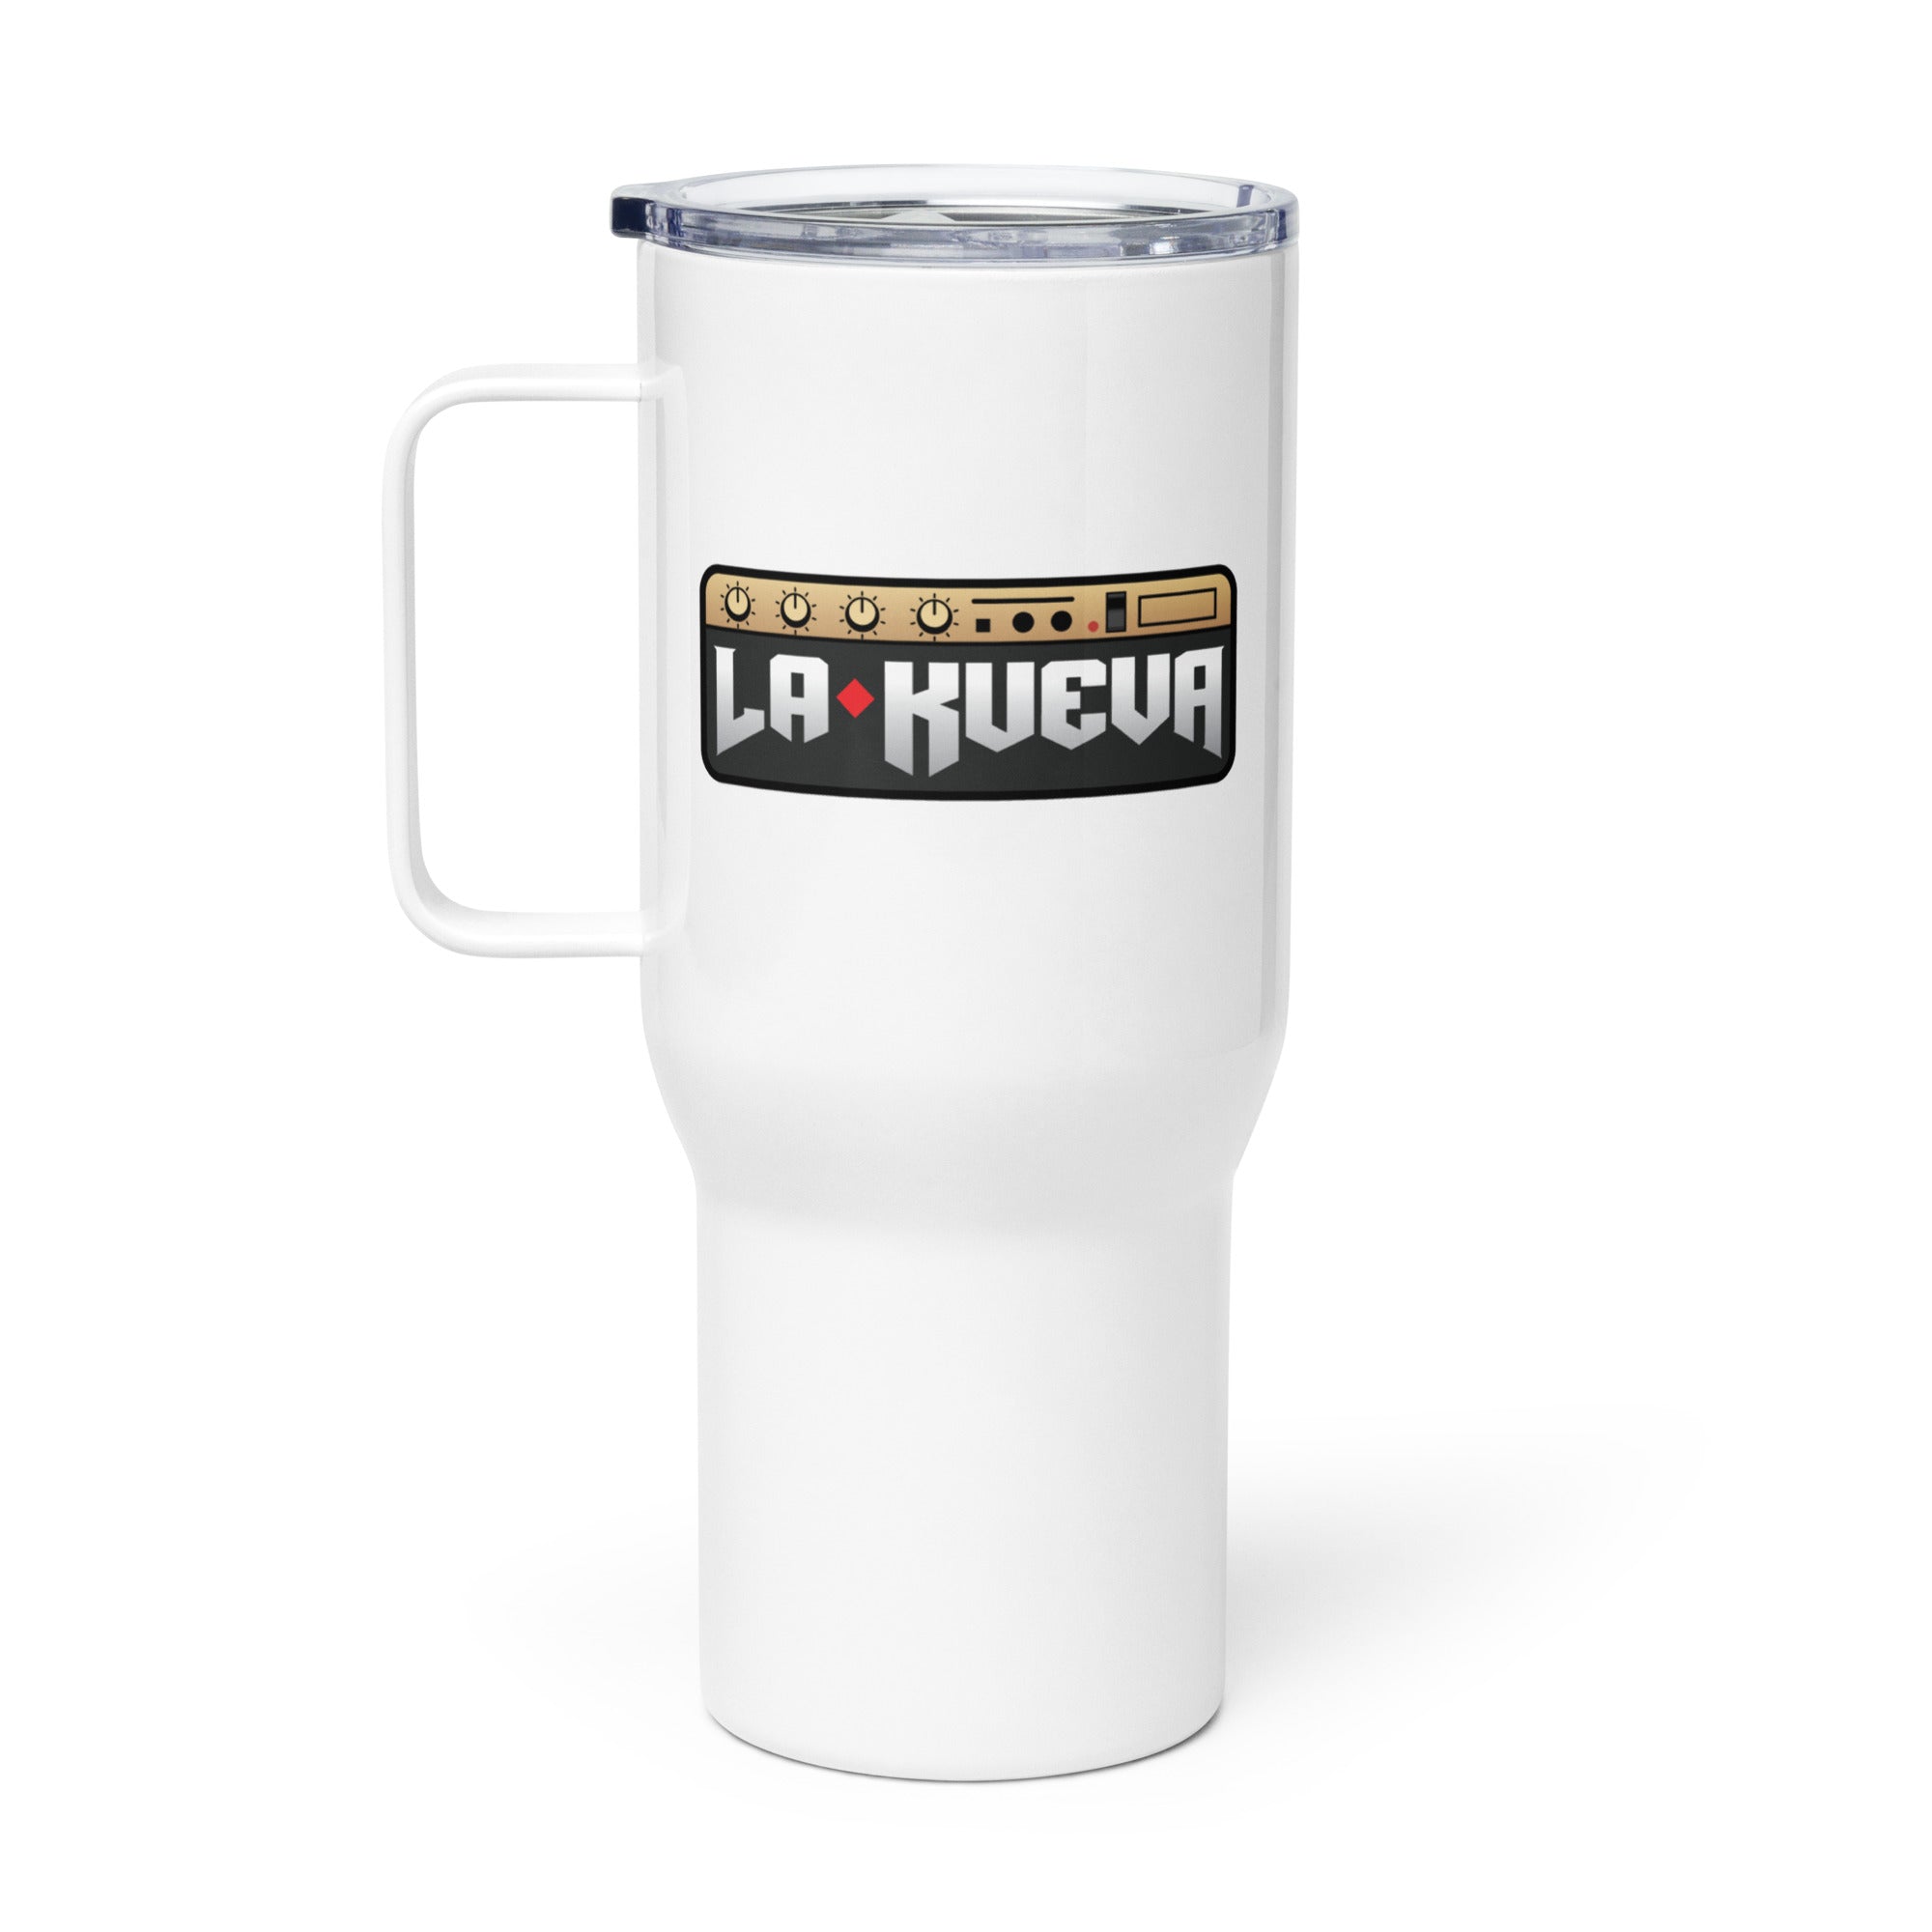 La Kueva: Travel Mug